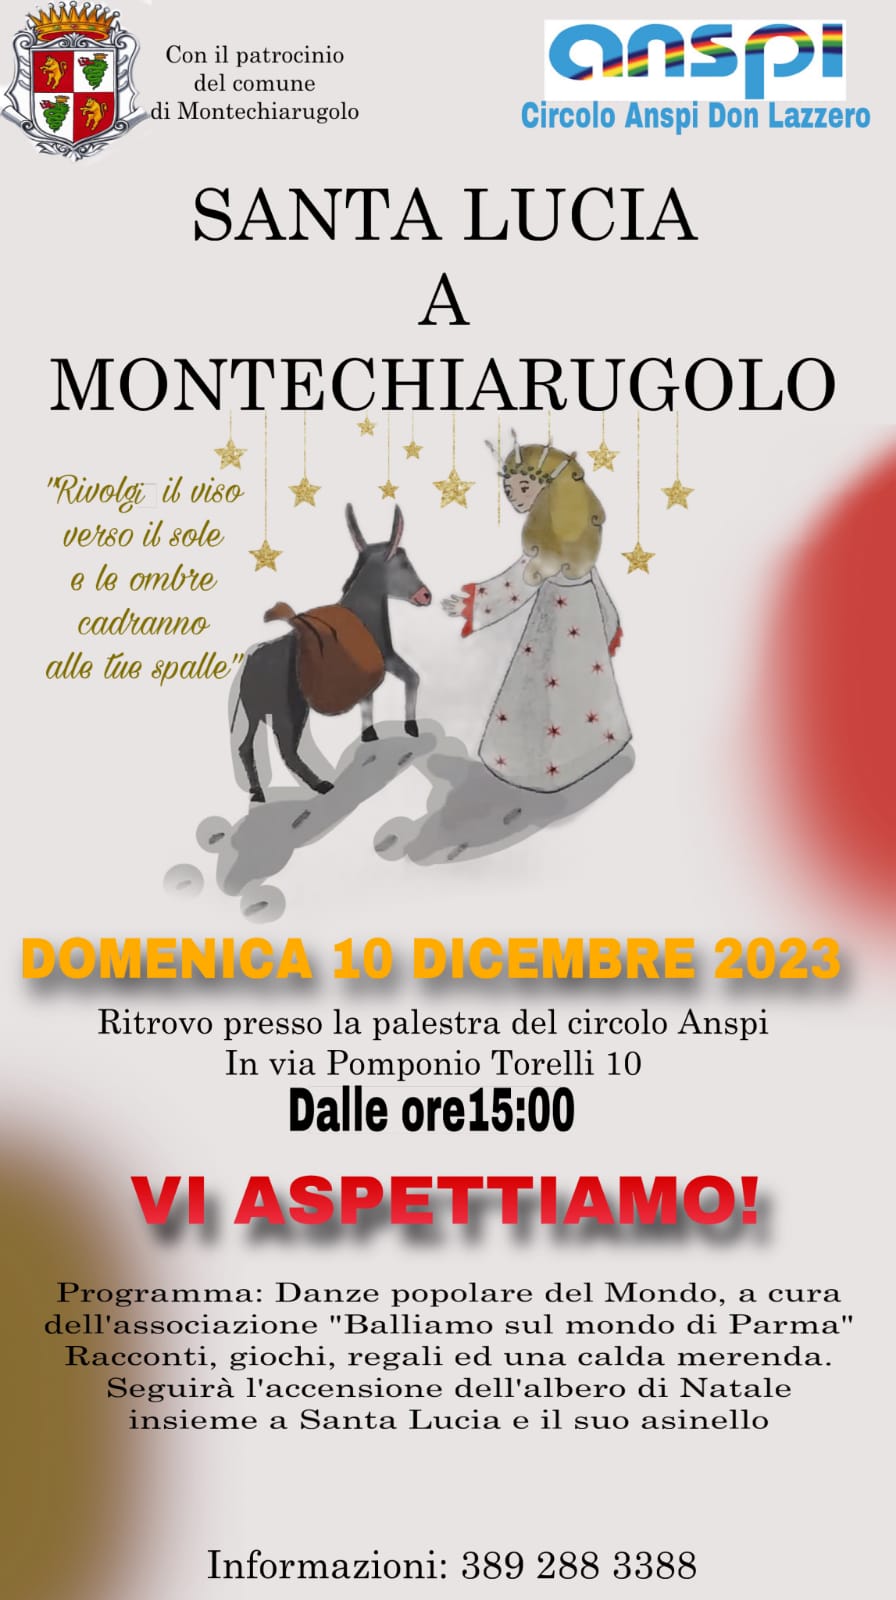 Santa Lucia a Montechiarugolo Anspi 2023